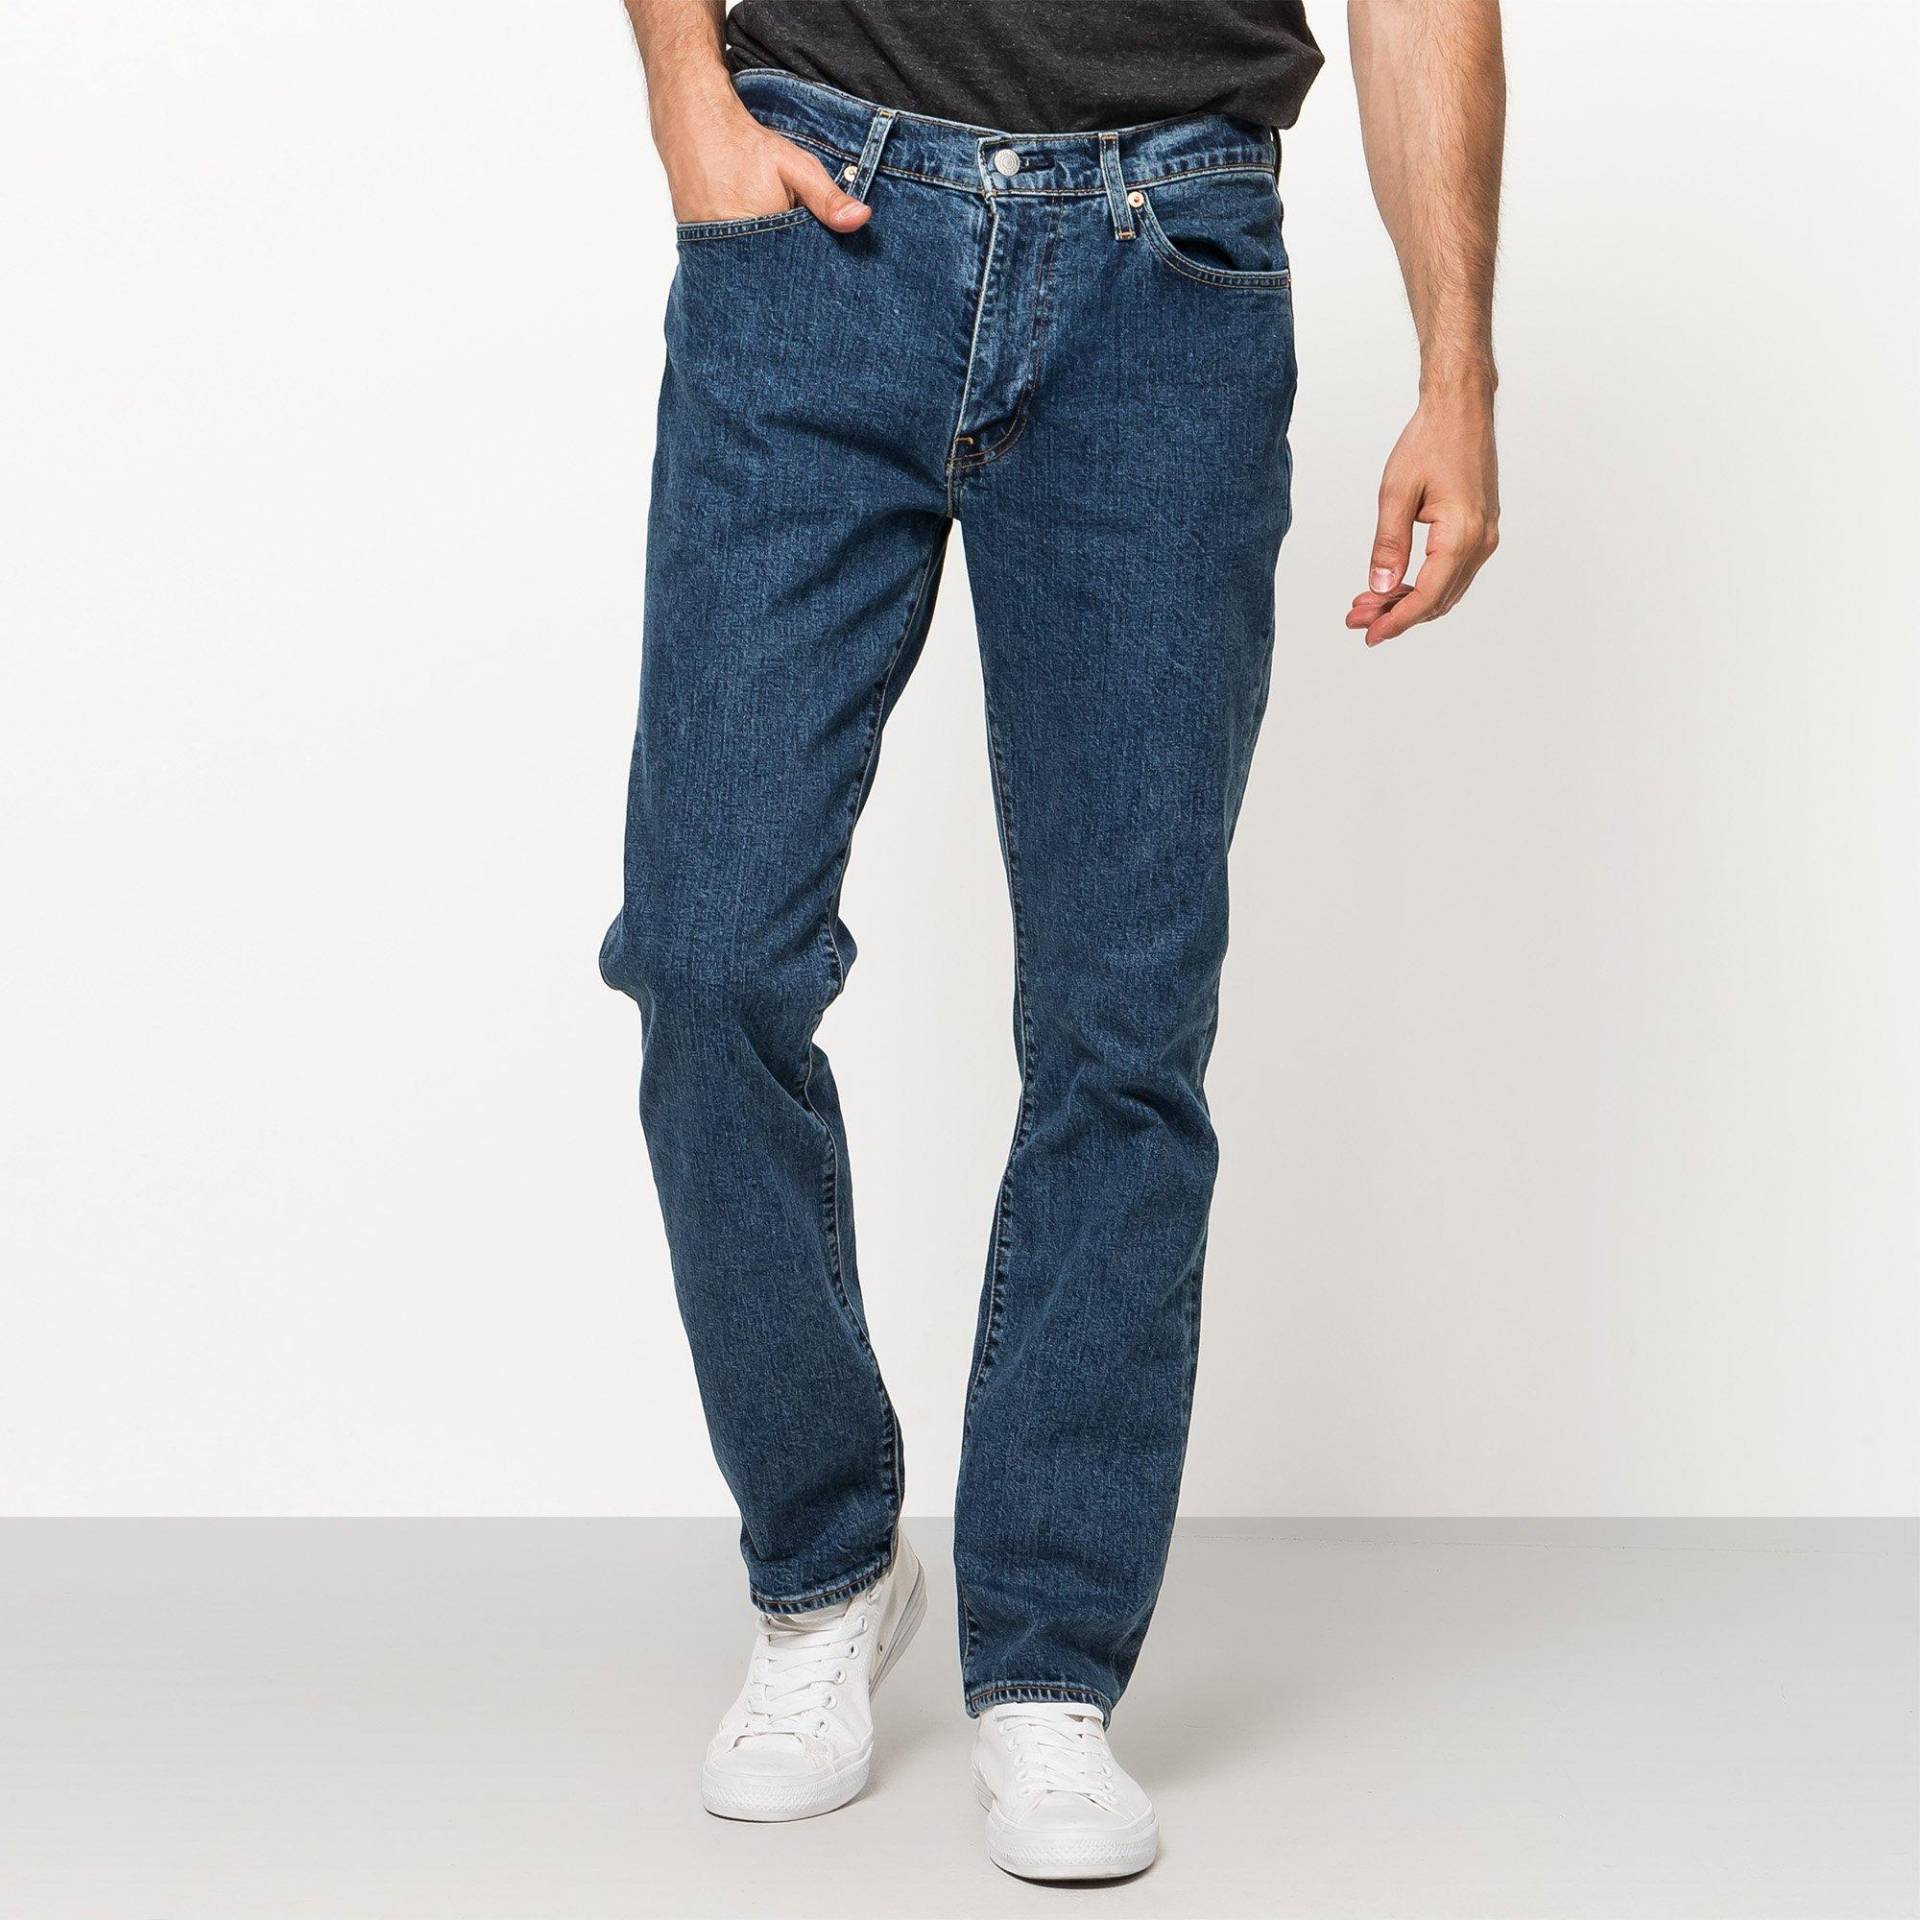 Jeans, Straight Leg Fit Herren Blau Denim L30/W36 von Levi's®